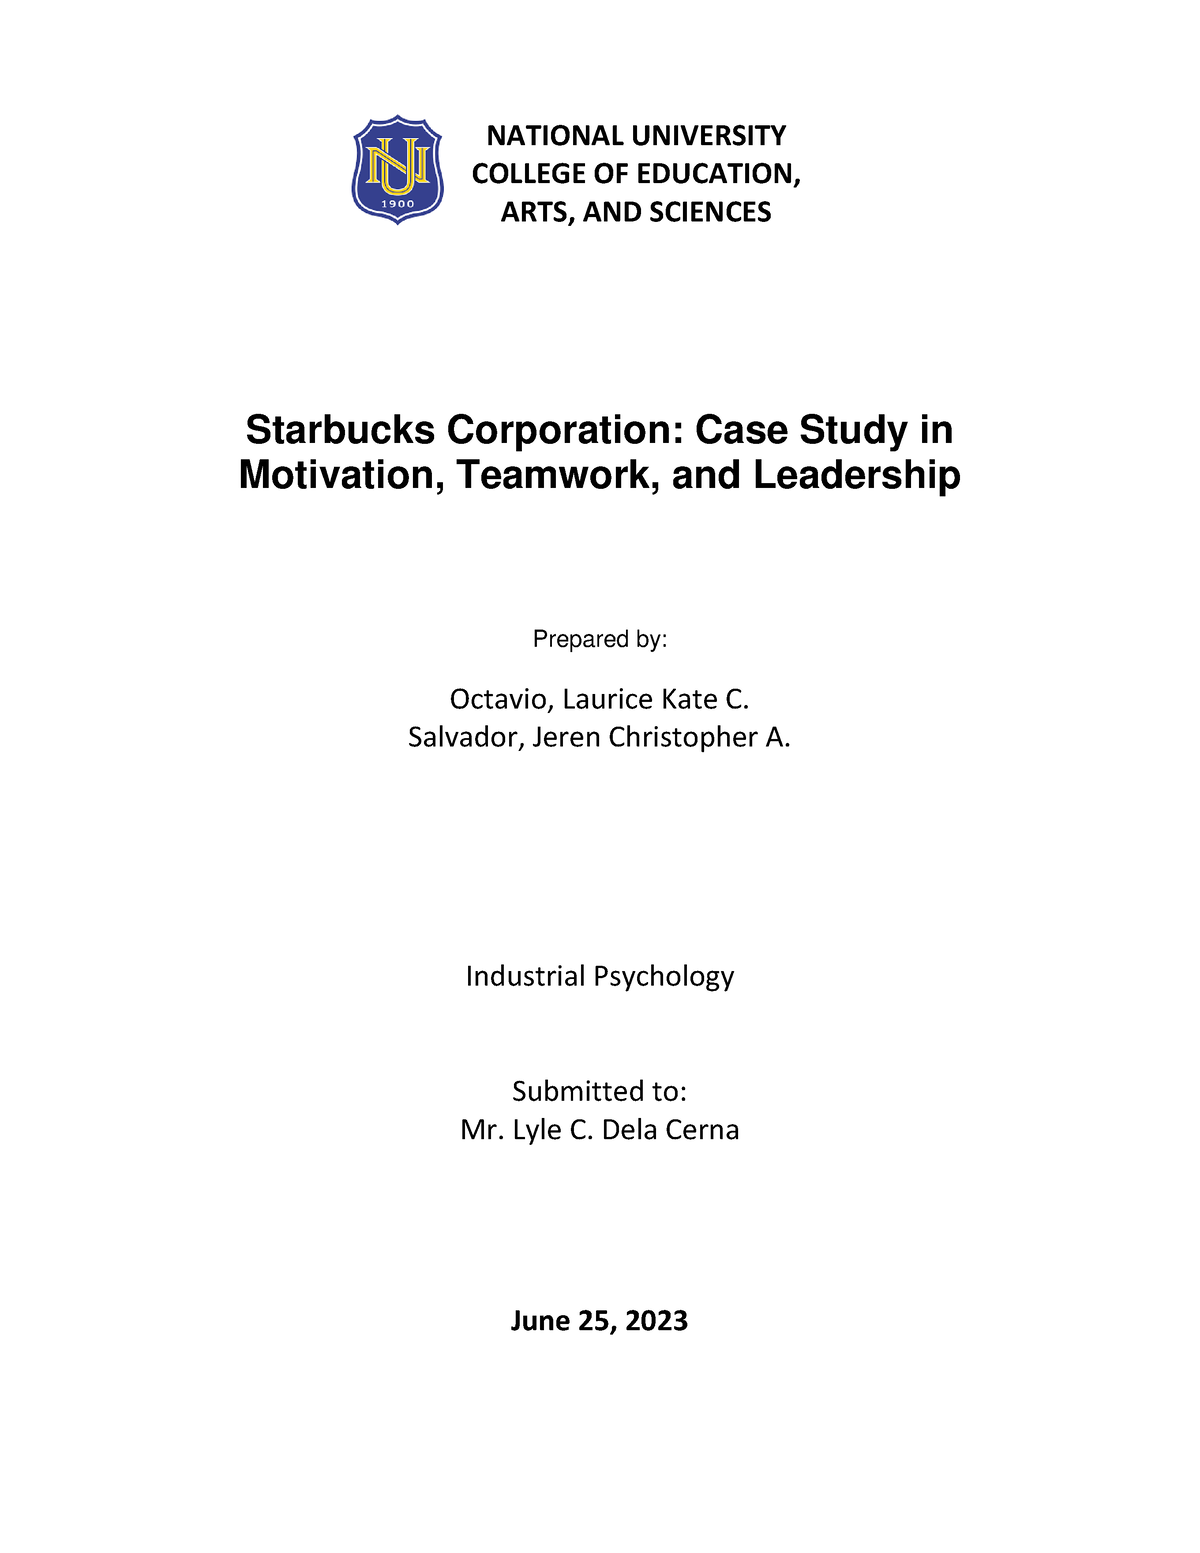 Starbucks Case Study Salvador and Octavio copy (1) 1 - Starbucks ...